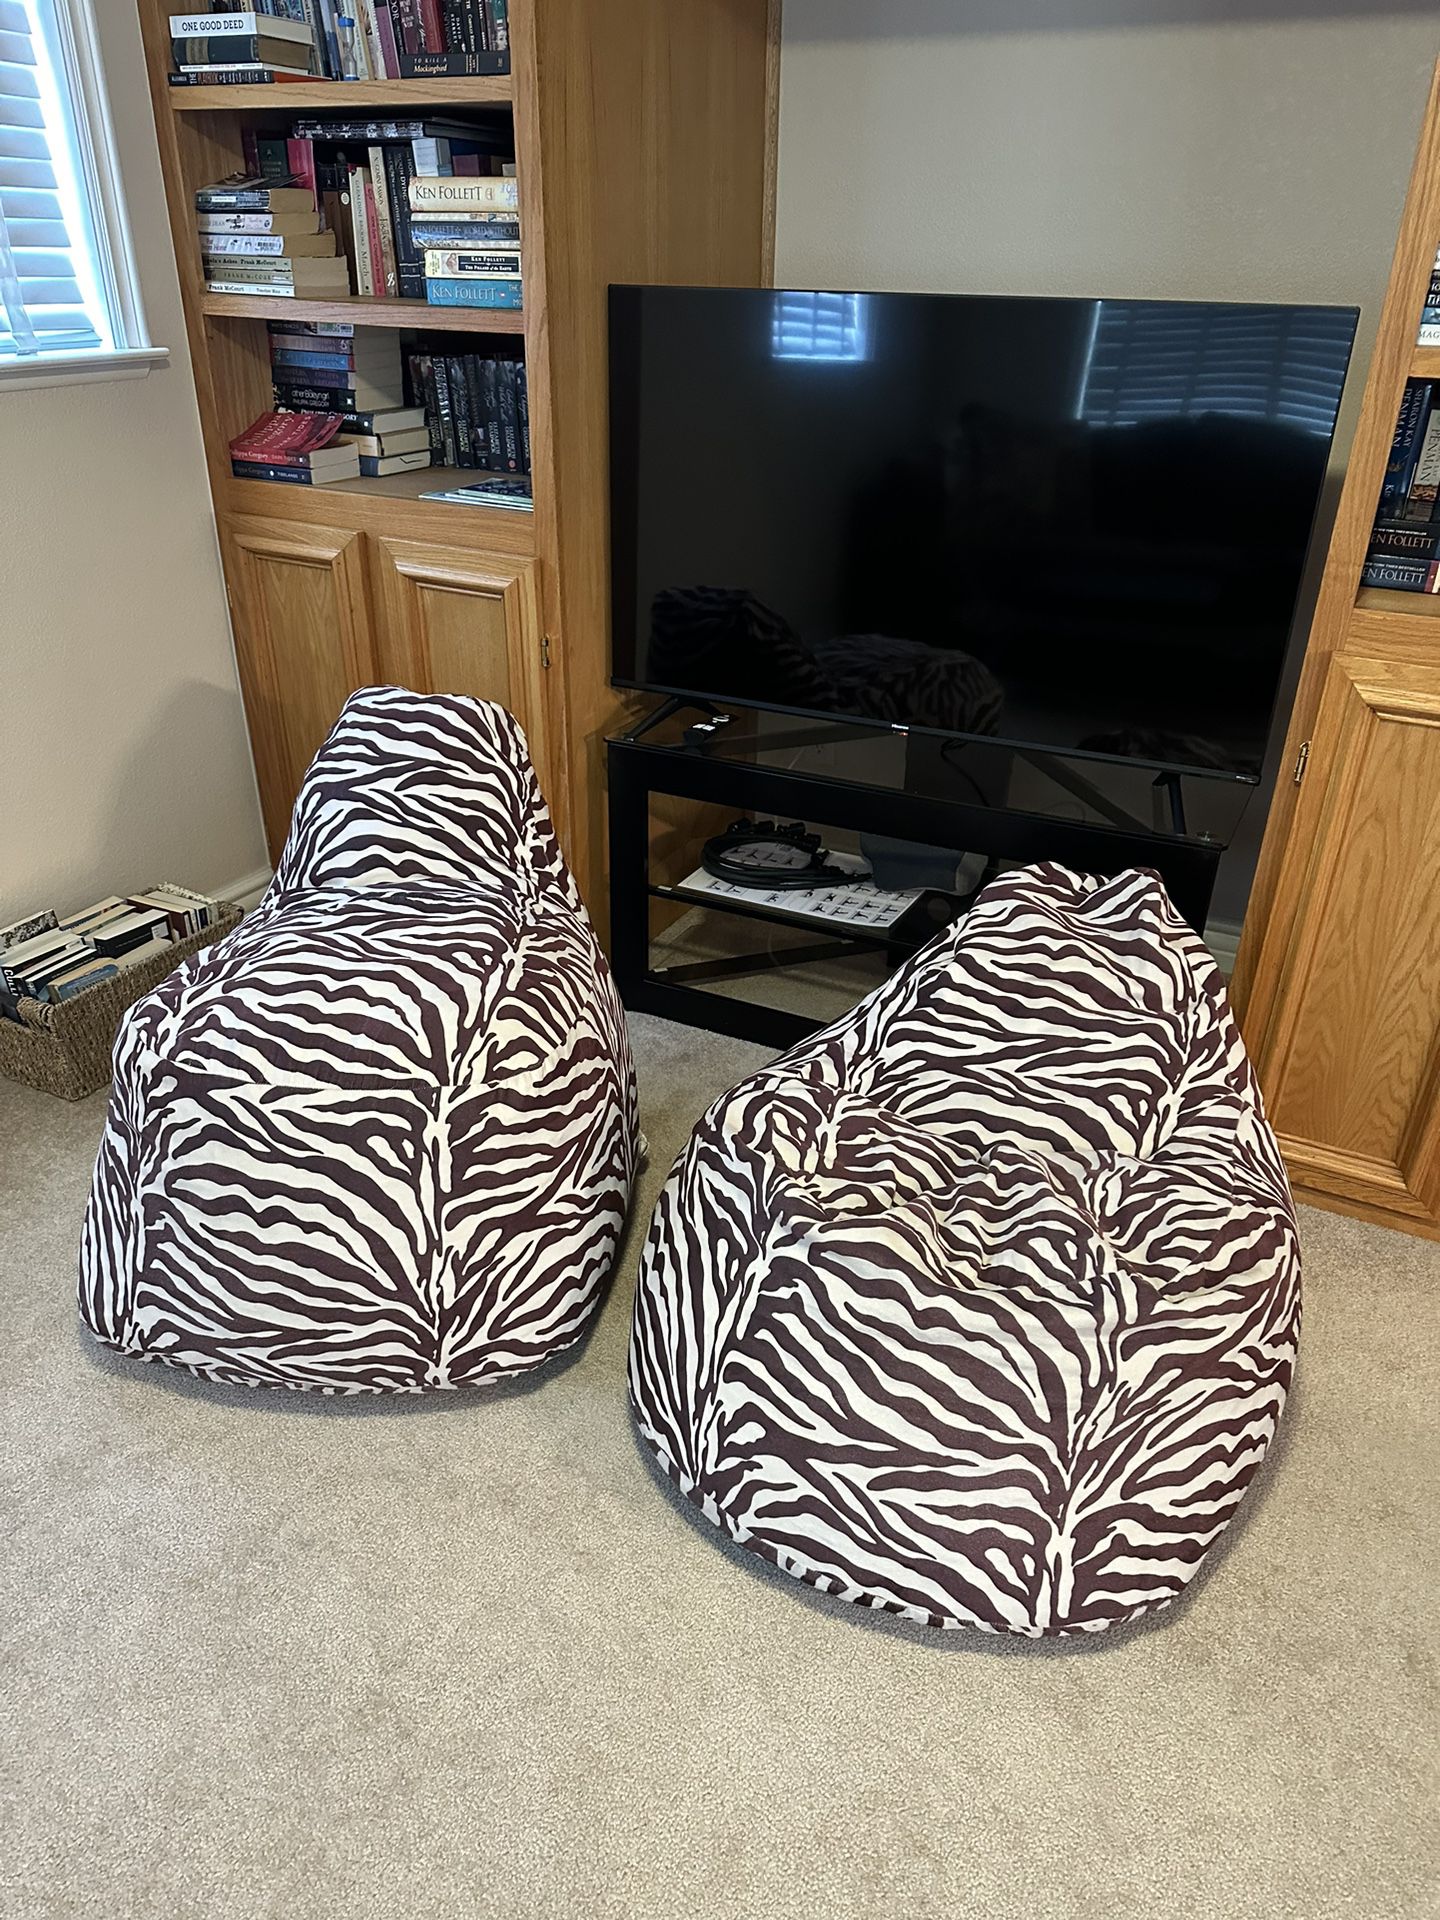 Set Of 2  Lounge Bag Chairs - $25